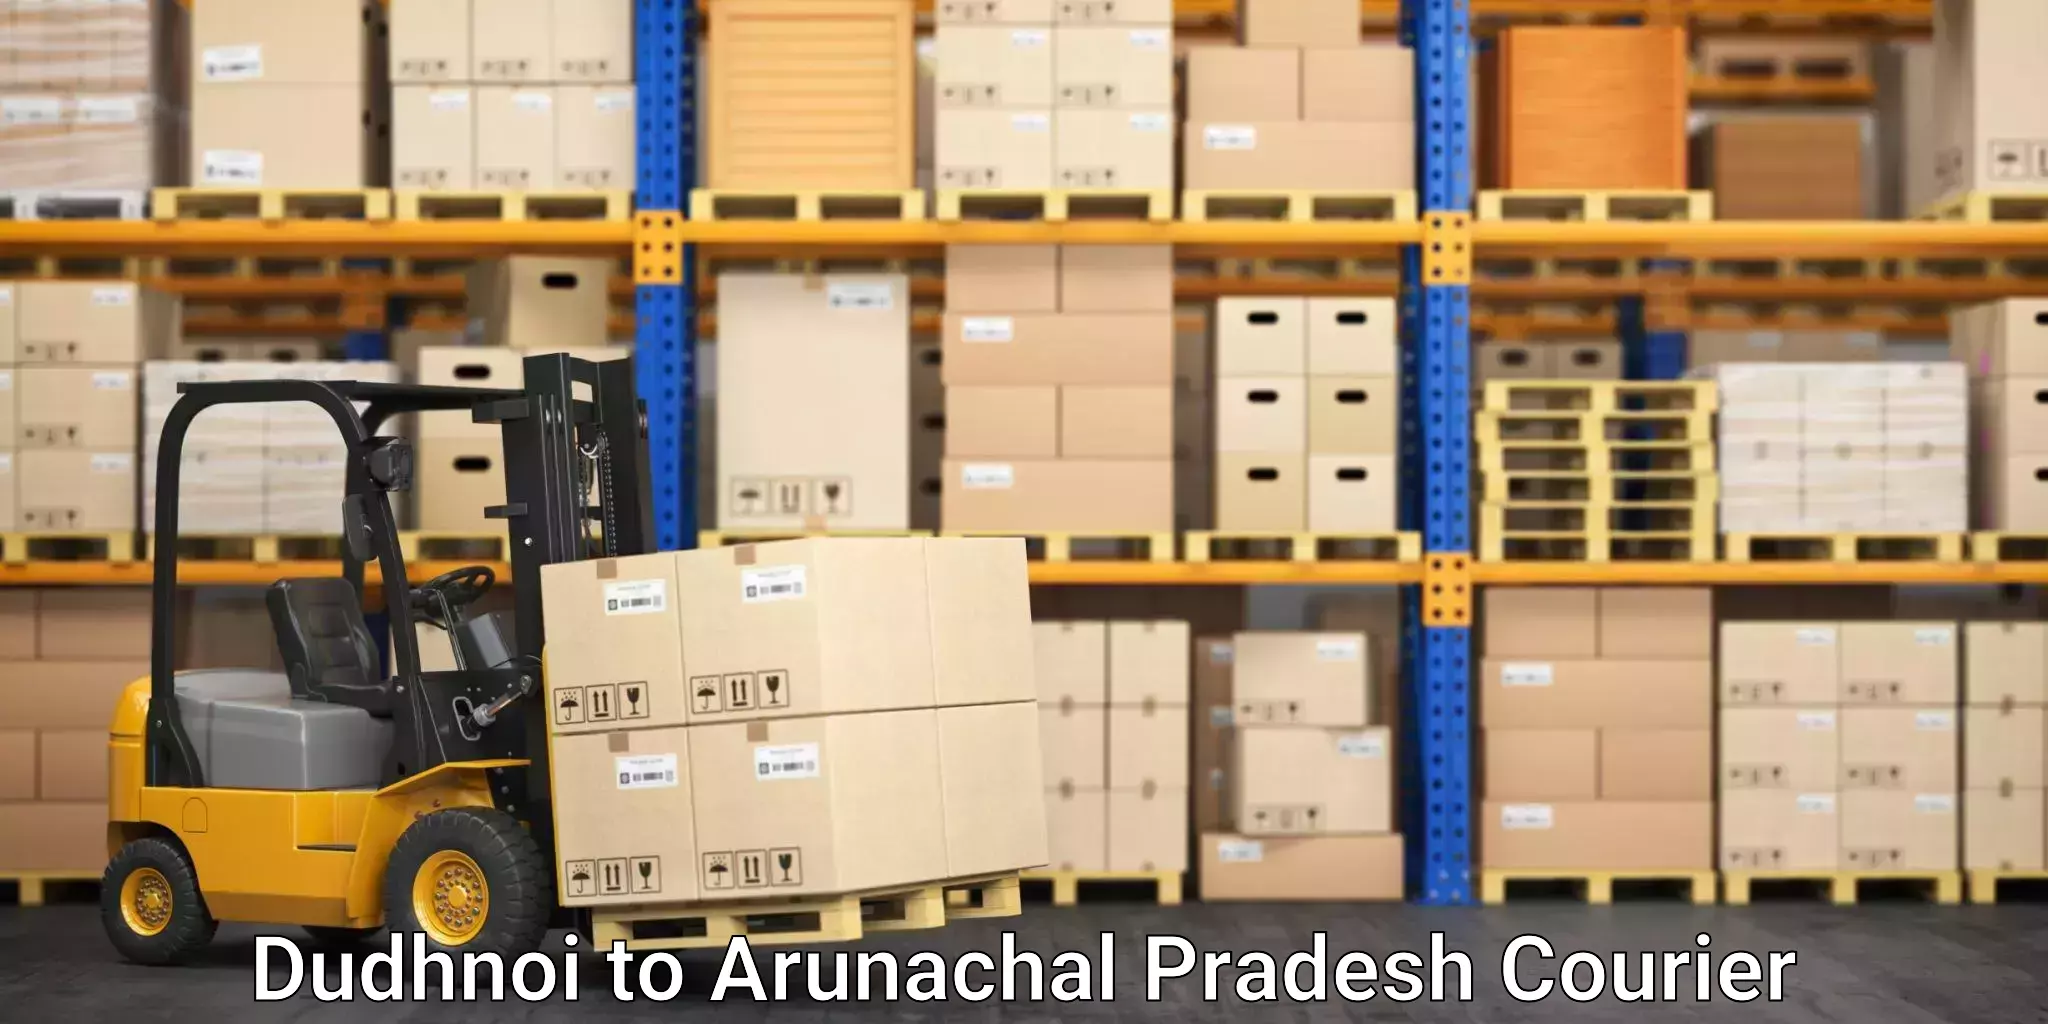 Express mail service Dudhnoi to Arunachal Pradesh